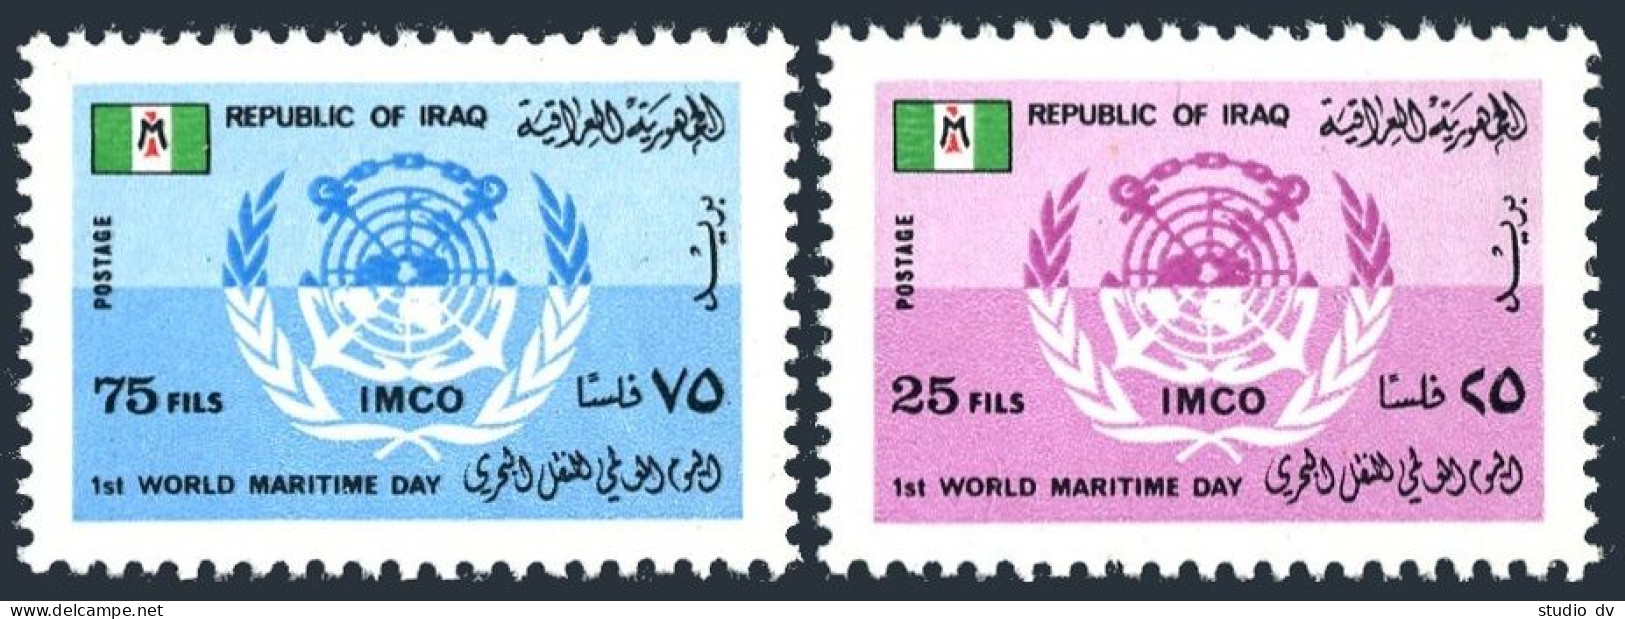 Iraq 860-861, MNH. Michel 959-960. 1st World Maritime Day, 1978. IMCO Emblem. - Irak